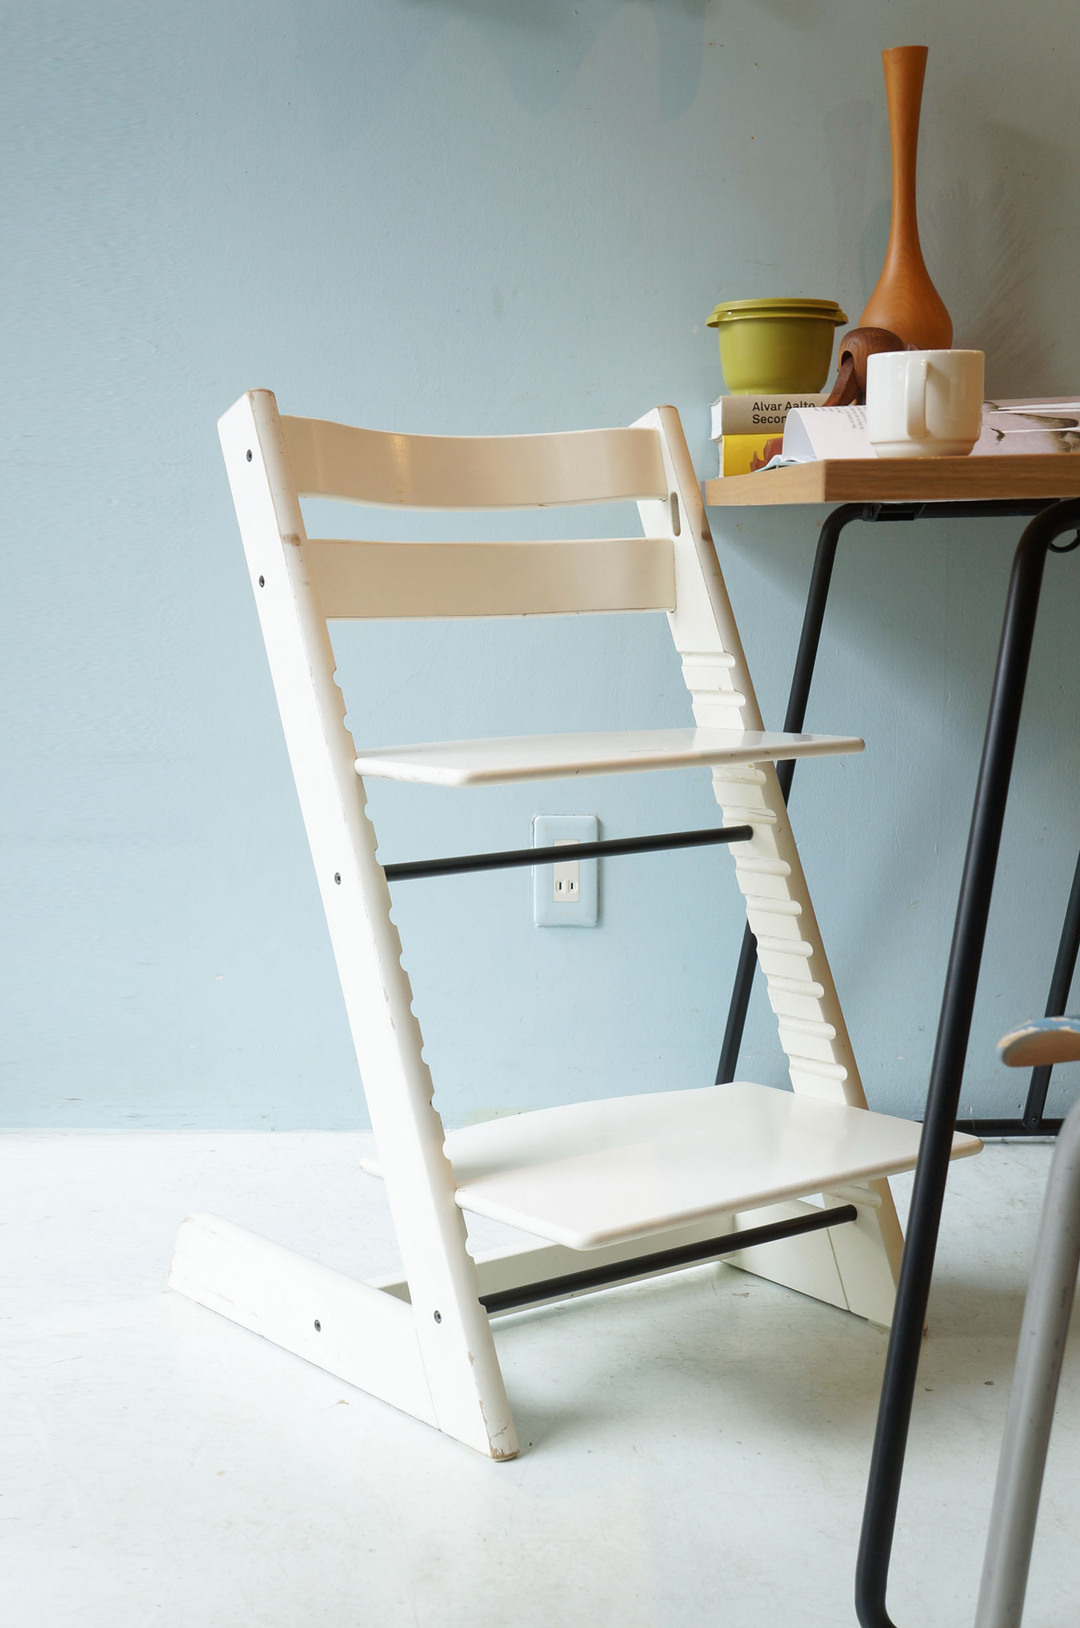 STOKKE TRIPP TRAPP Baby Chair White/ストッケ トリップトラップ ベビーチェア ハイチェア ホワイト 北欧デザイン